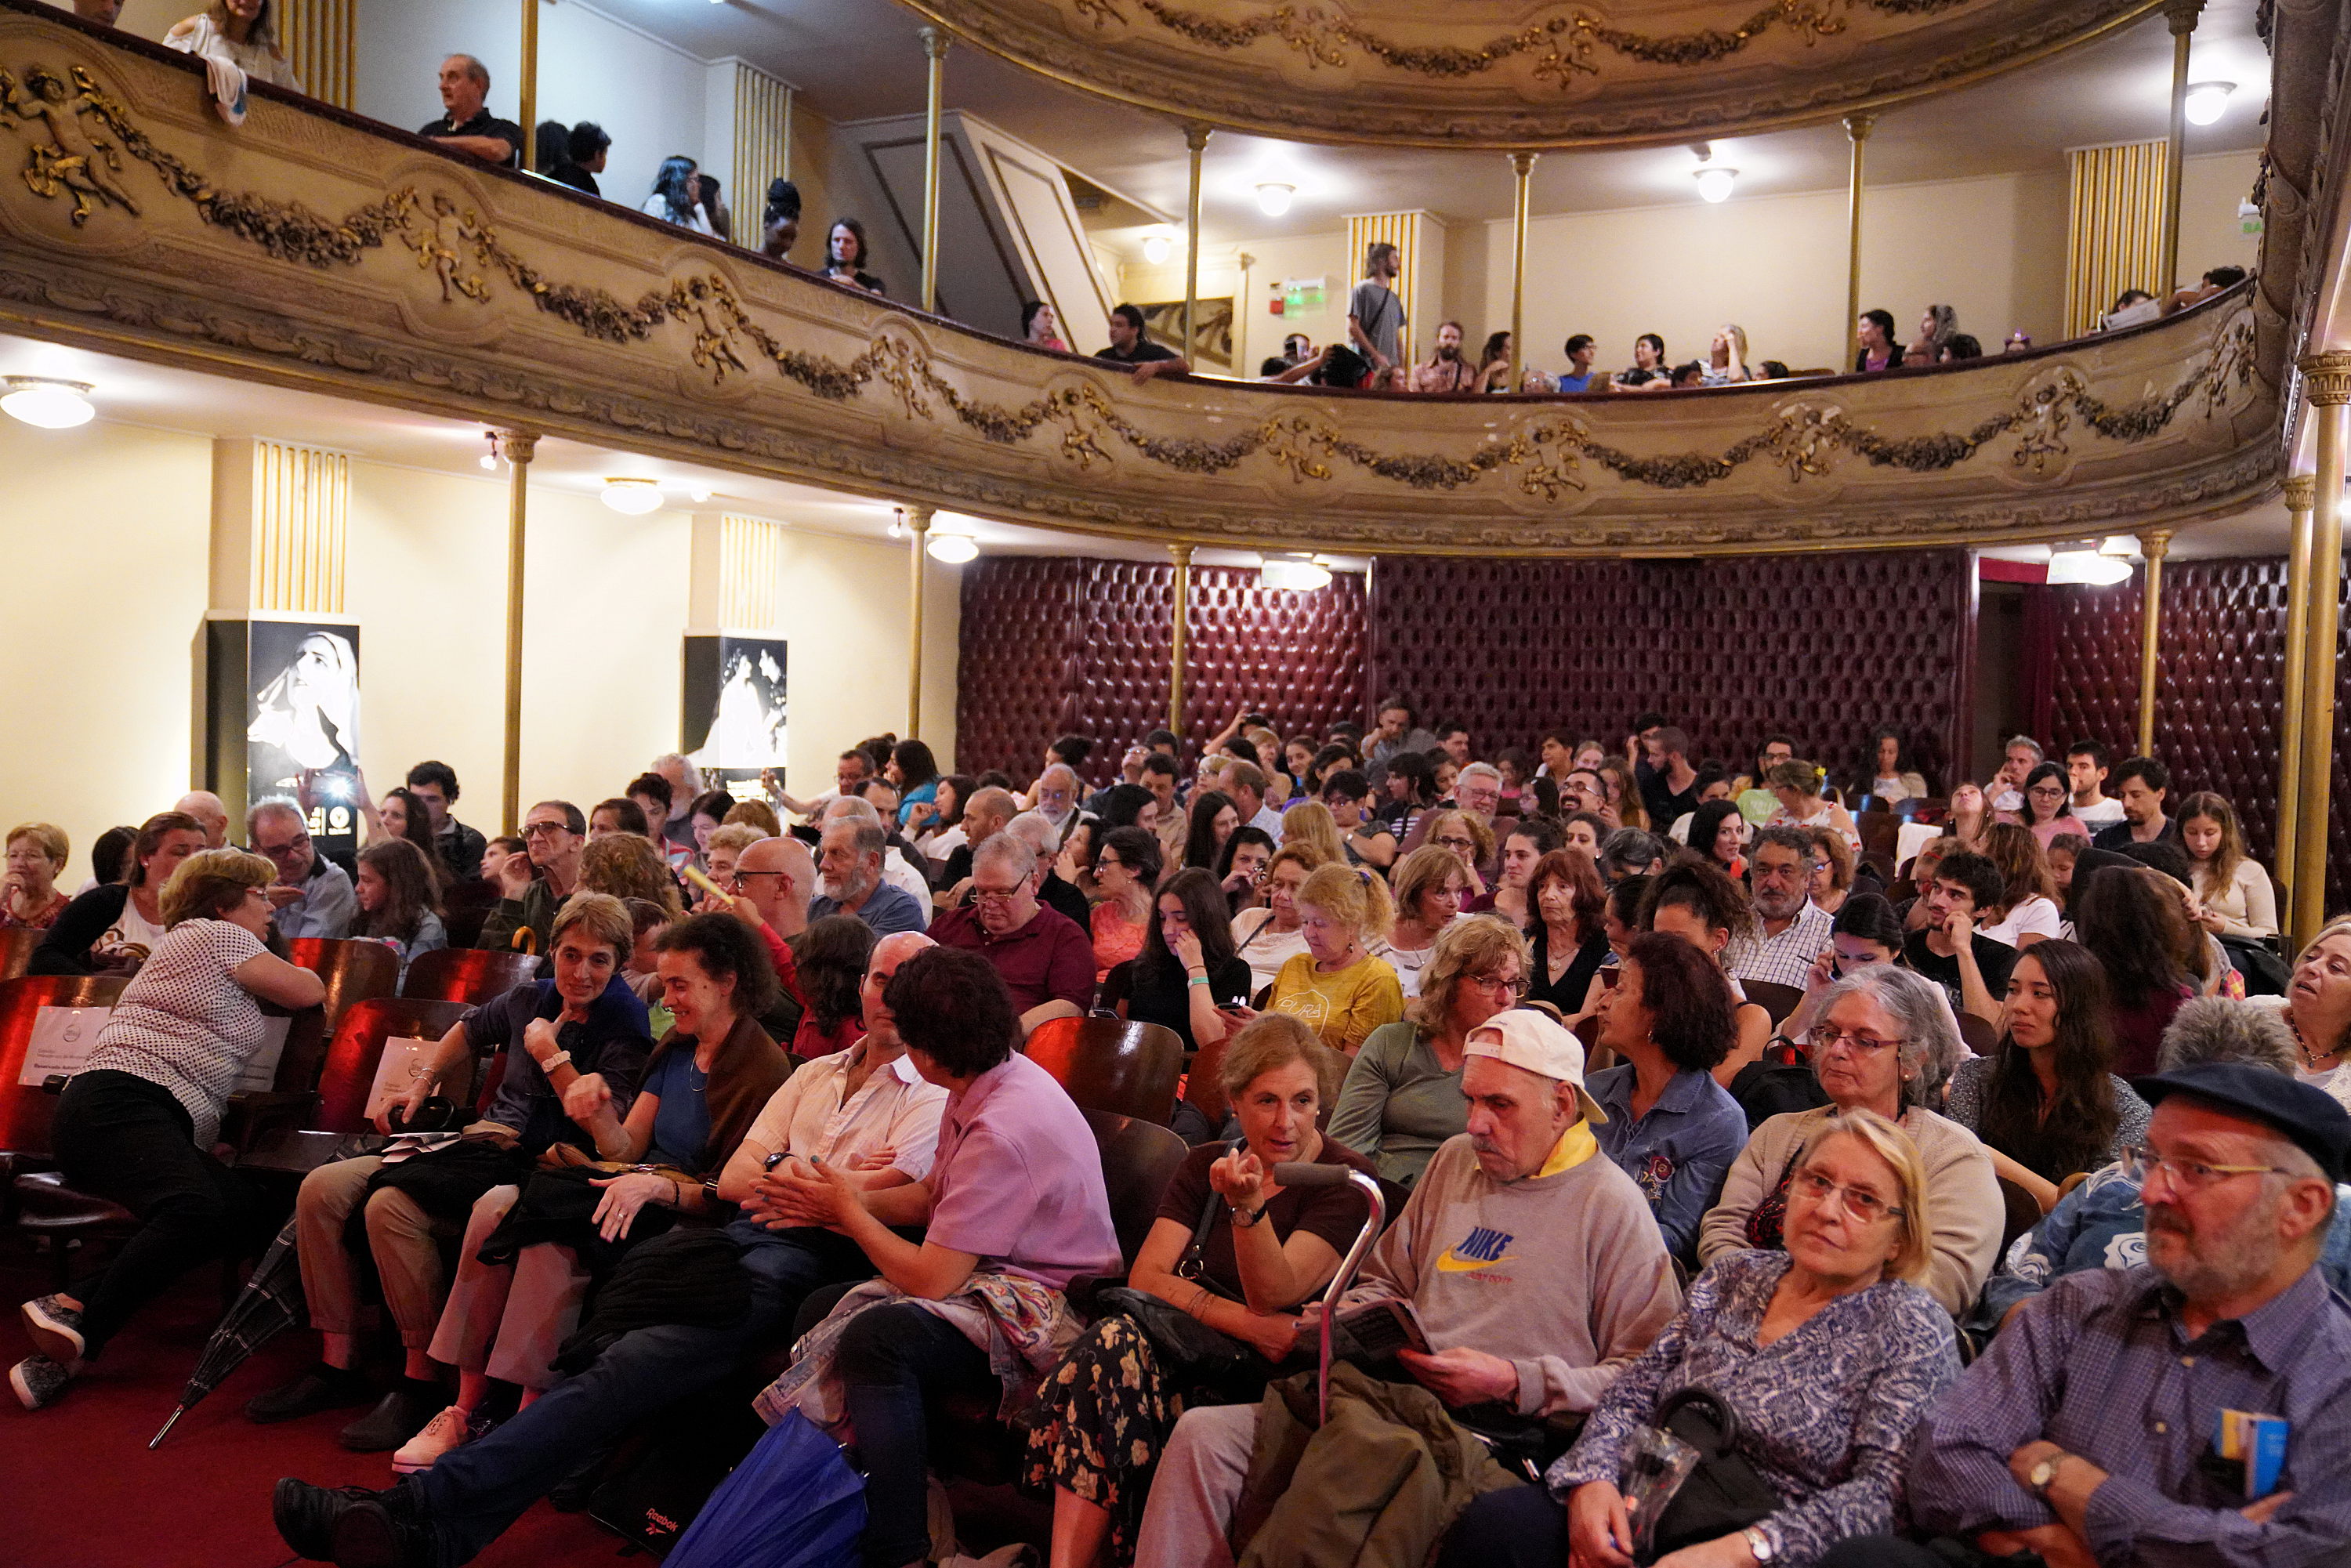 Festival Montevideo de las artes en la Sala Verdi